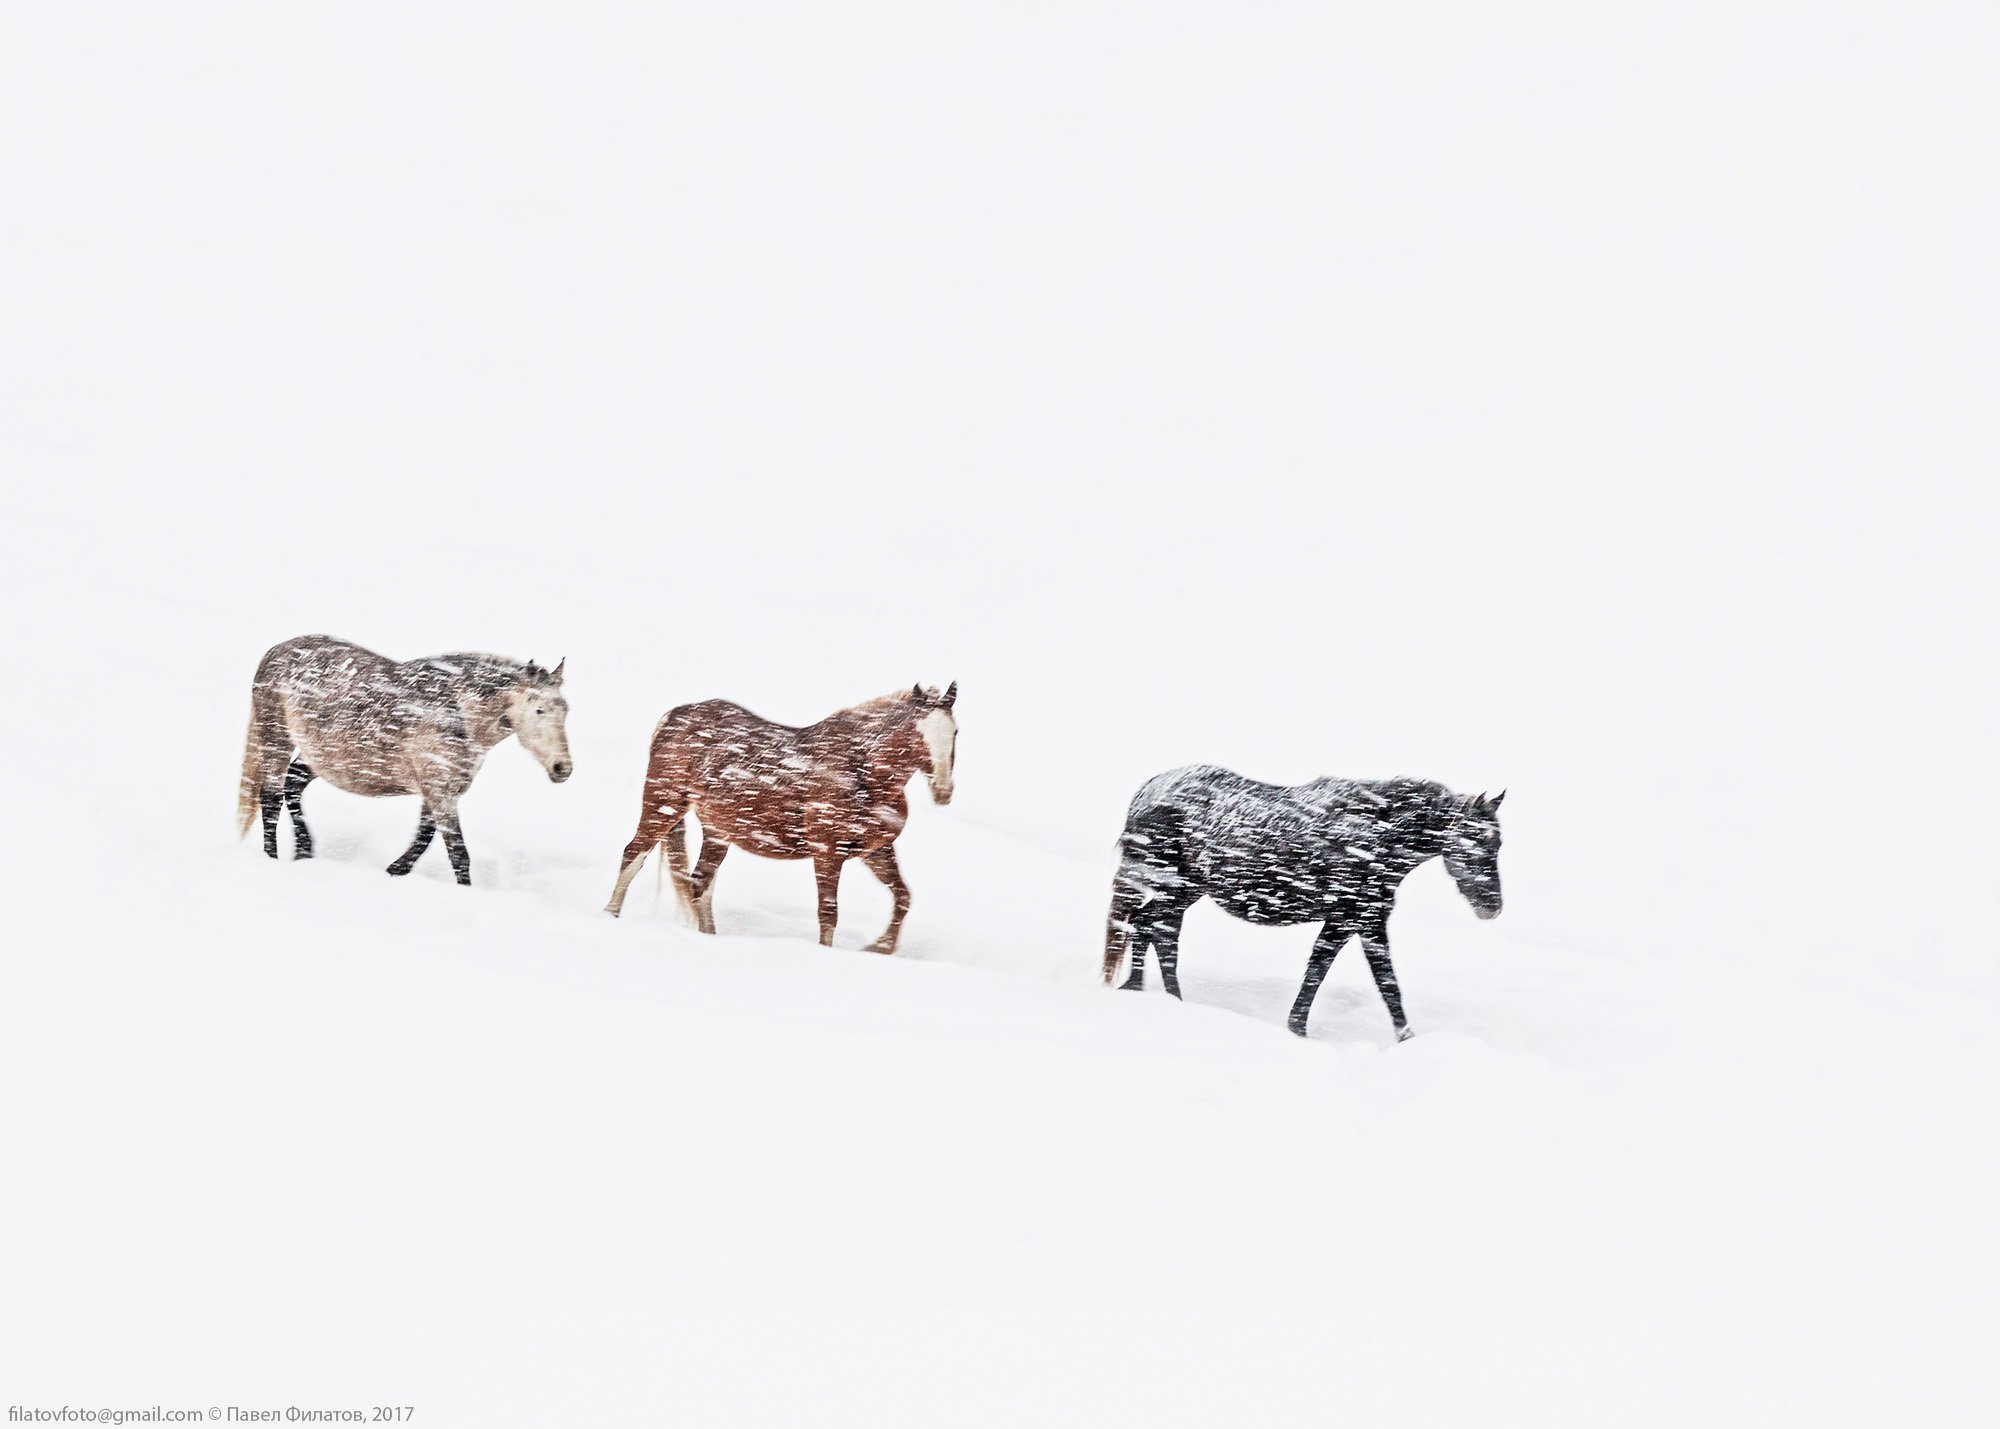 #алтай #сибирь #siberia #павел_филатов #pavel_filatov #filatovpavelaltai #снег #снегопад #буран #красногорье #красногорское #предгорья #метель #кони #fog #snow #blizzard #horses, Павел Филатов